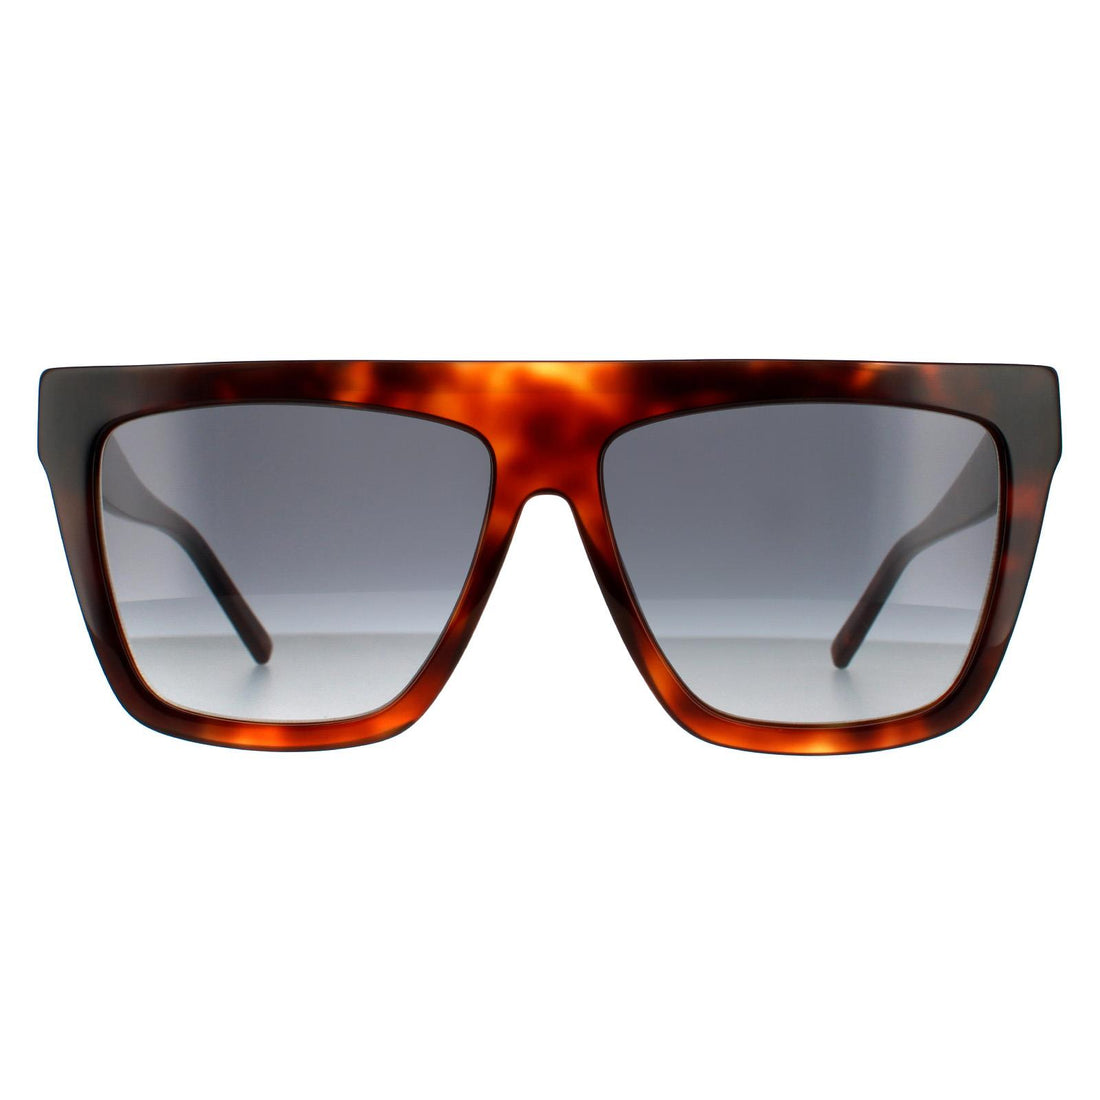 Hugo Boss BOSS 1153/S Sunglasses Havana / Dark Grey Gradient